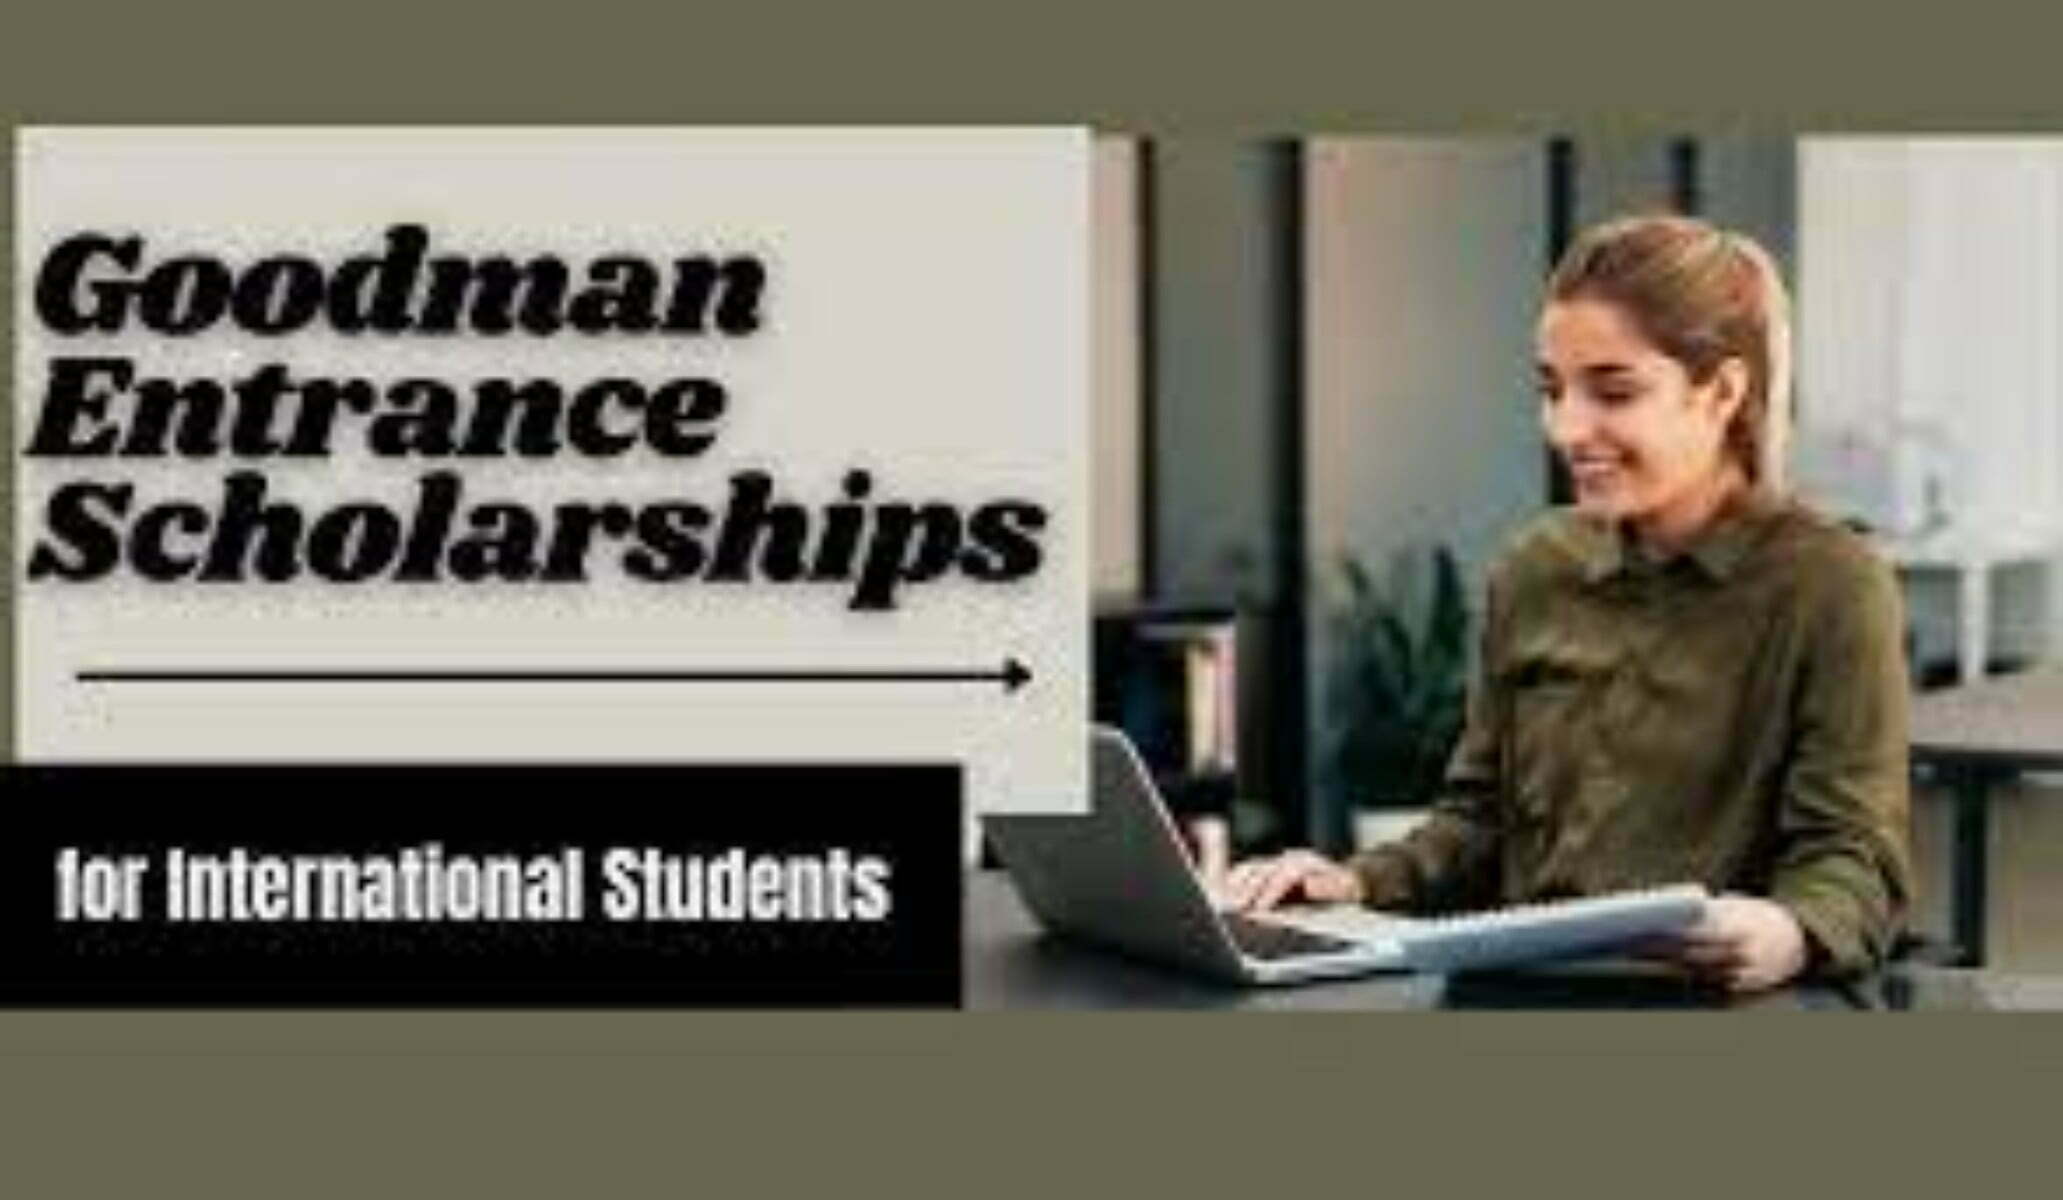 Goodman Entrance Scholarships 2022 at Brock University in Canada